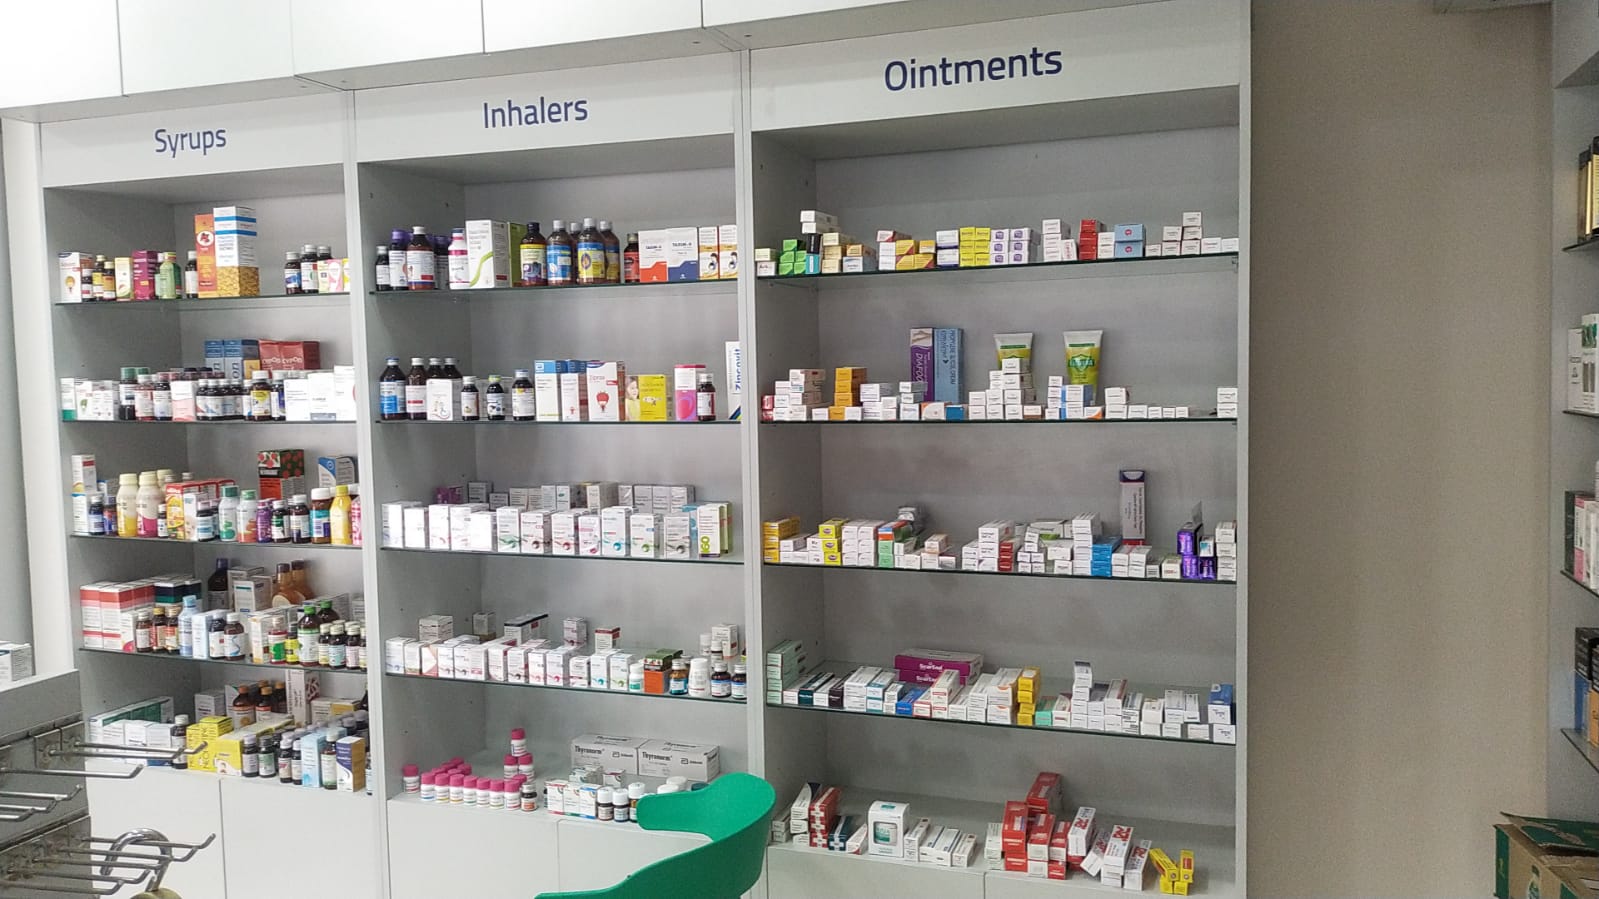 Aster Pharmacy in Vinayak Nagar, Chanda Nagar